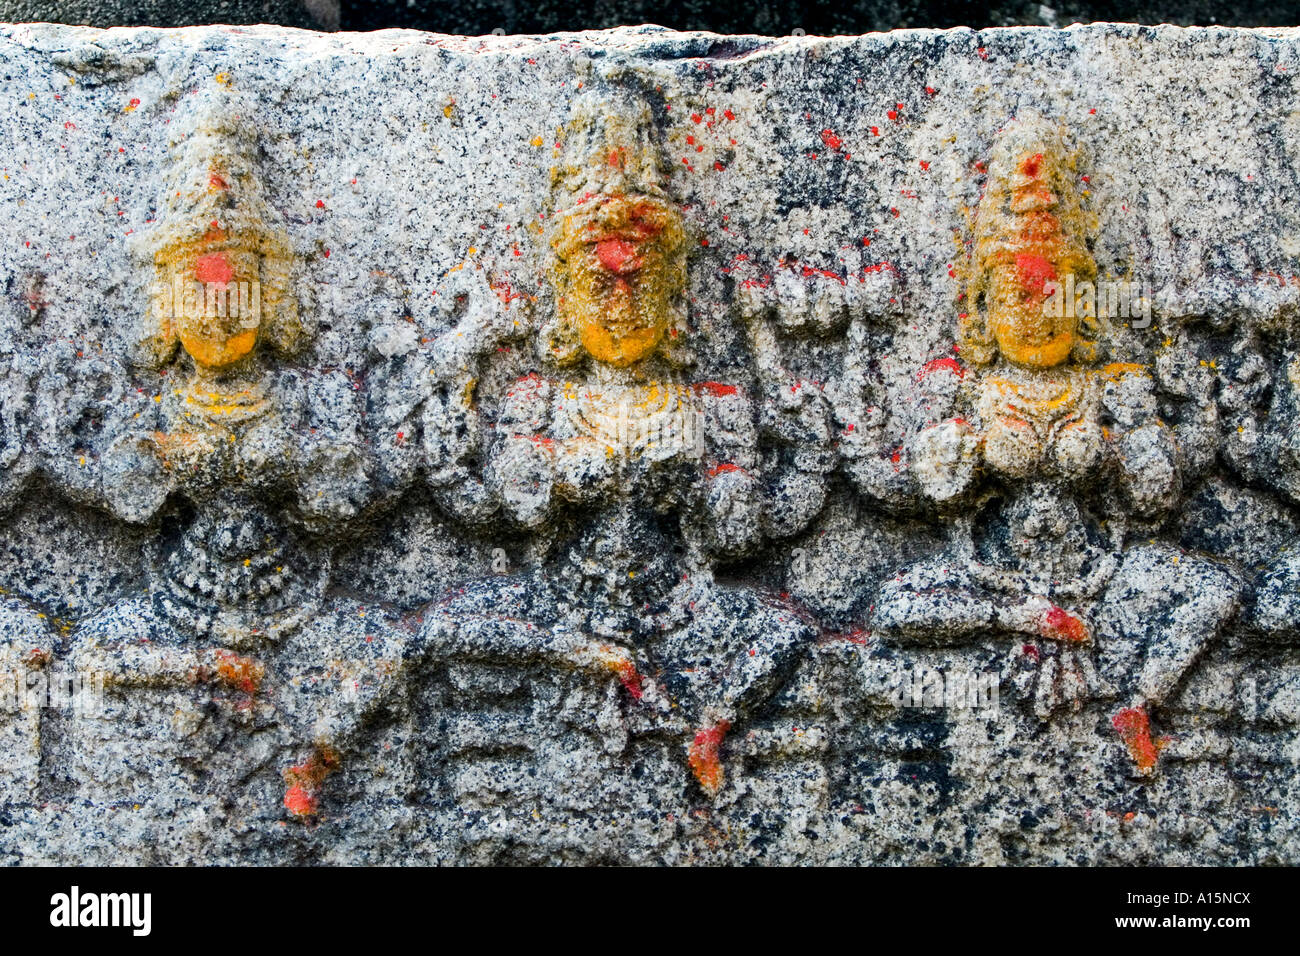 Hindu deities carved into stone at a Veerabhadra Temple in Lepakshi, Andhra Pradesh, India. Stock Photo